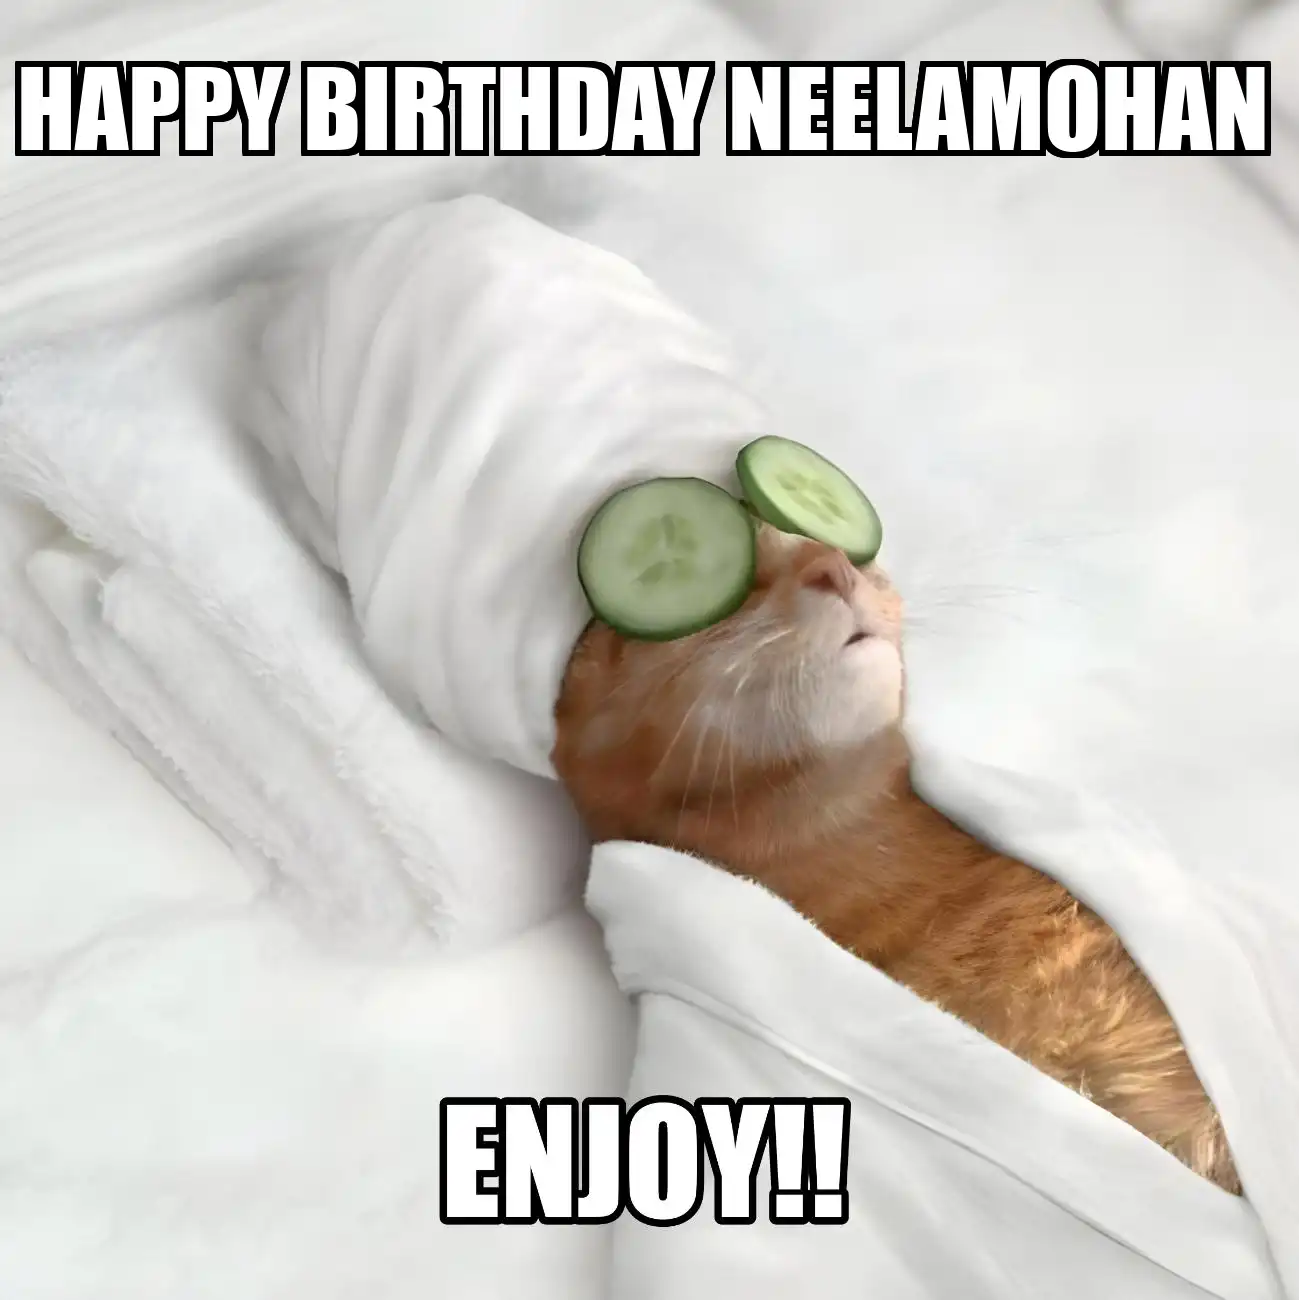 Happy Birthday Neelamohan Enjoy Cat Meme